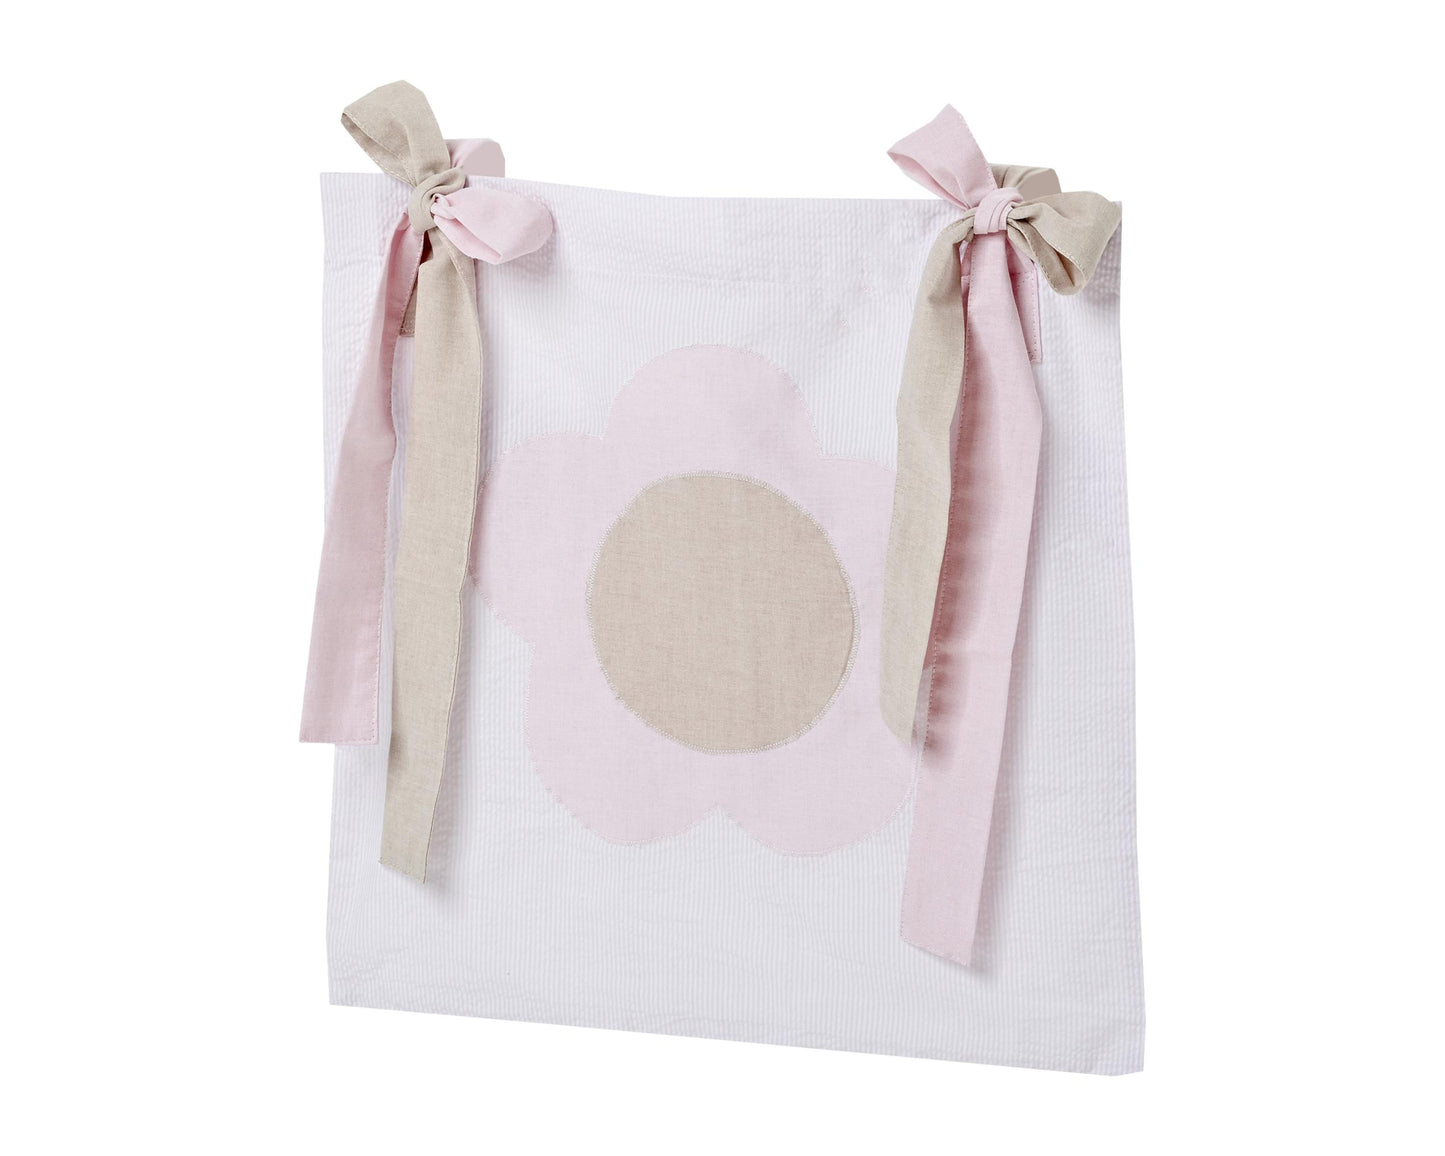 Fairytale Flower - Bed bag with ties